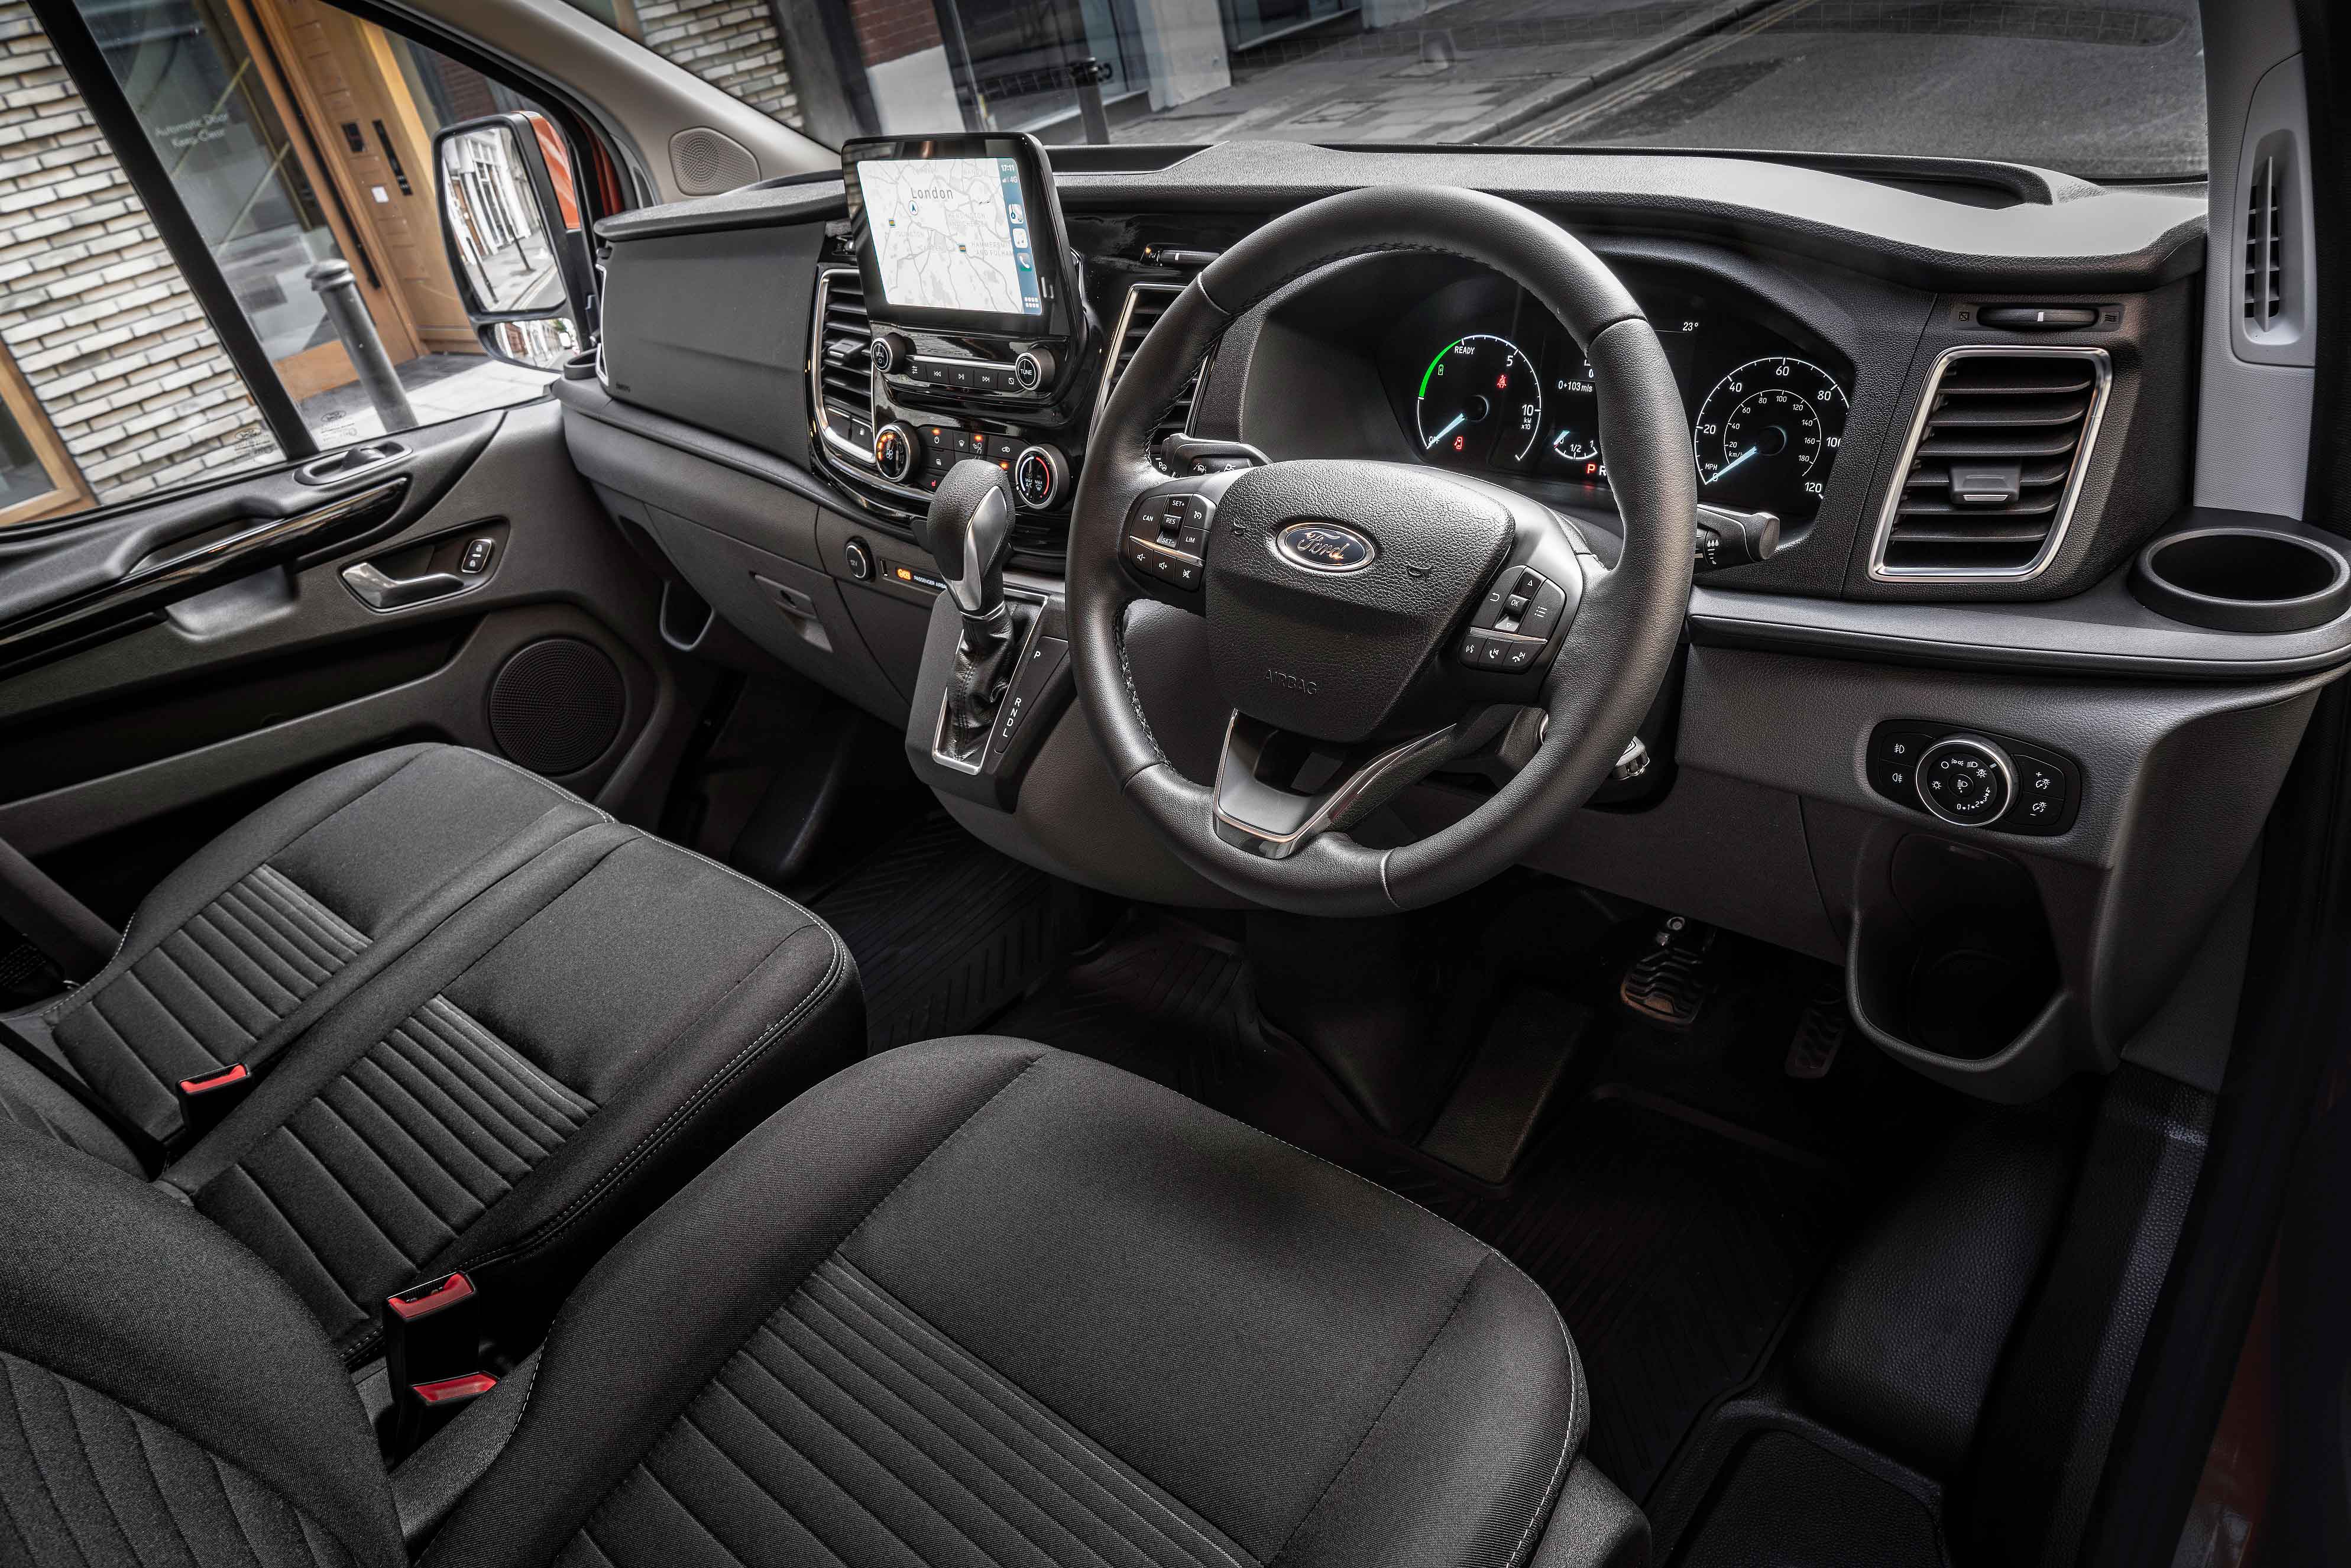 Ford Transit Custom hybrid interior & comfort | DrivingElectric